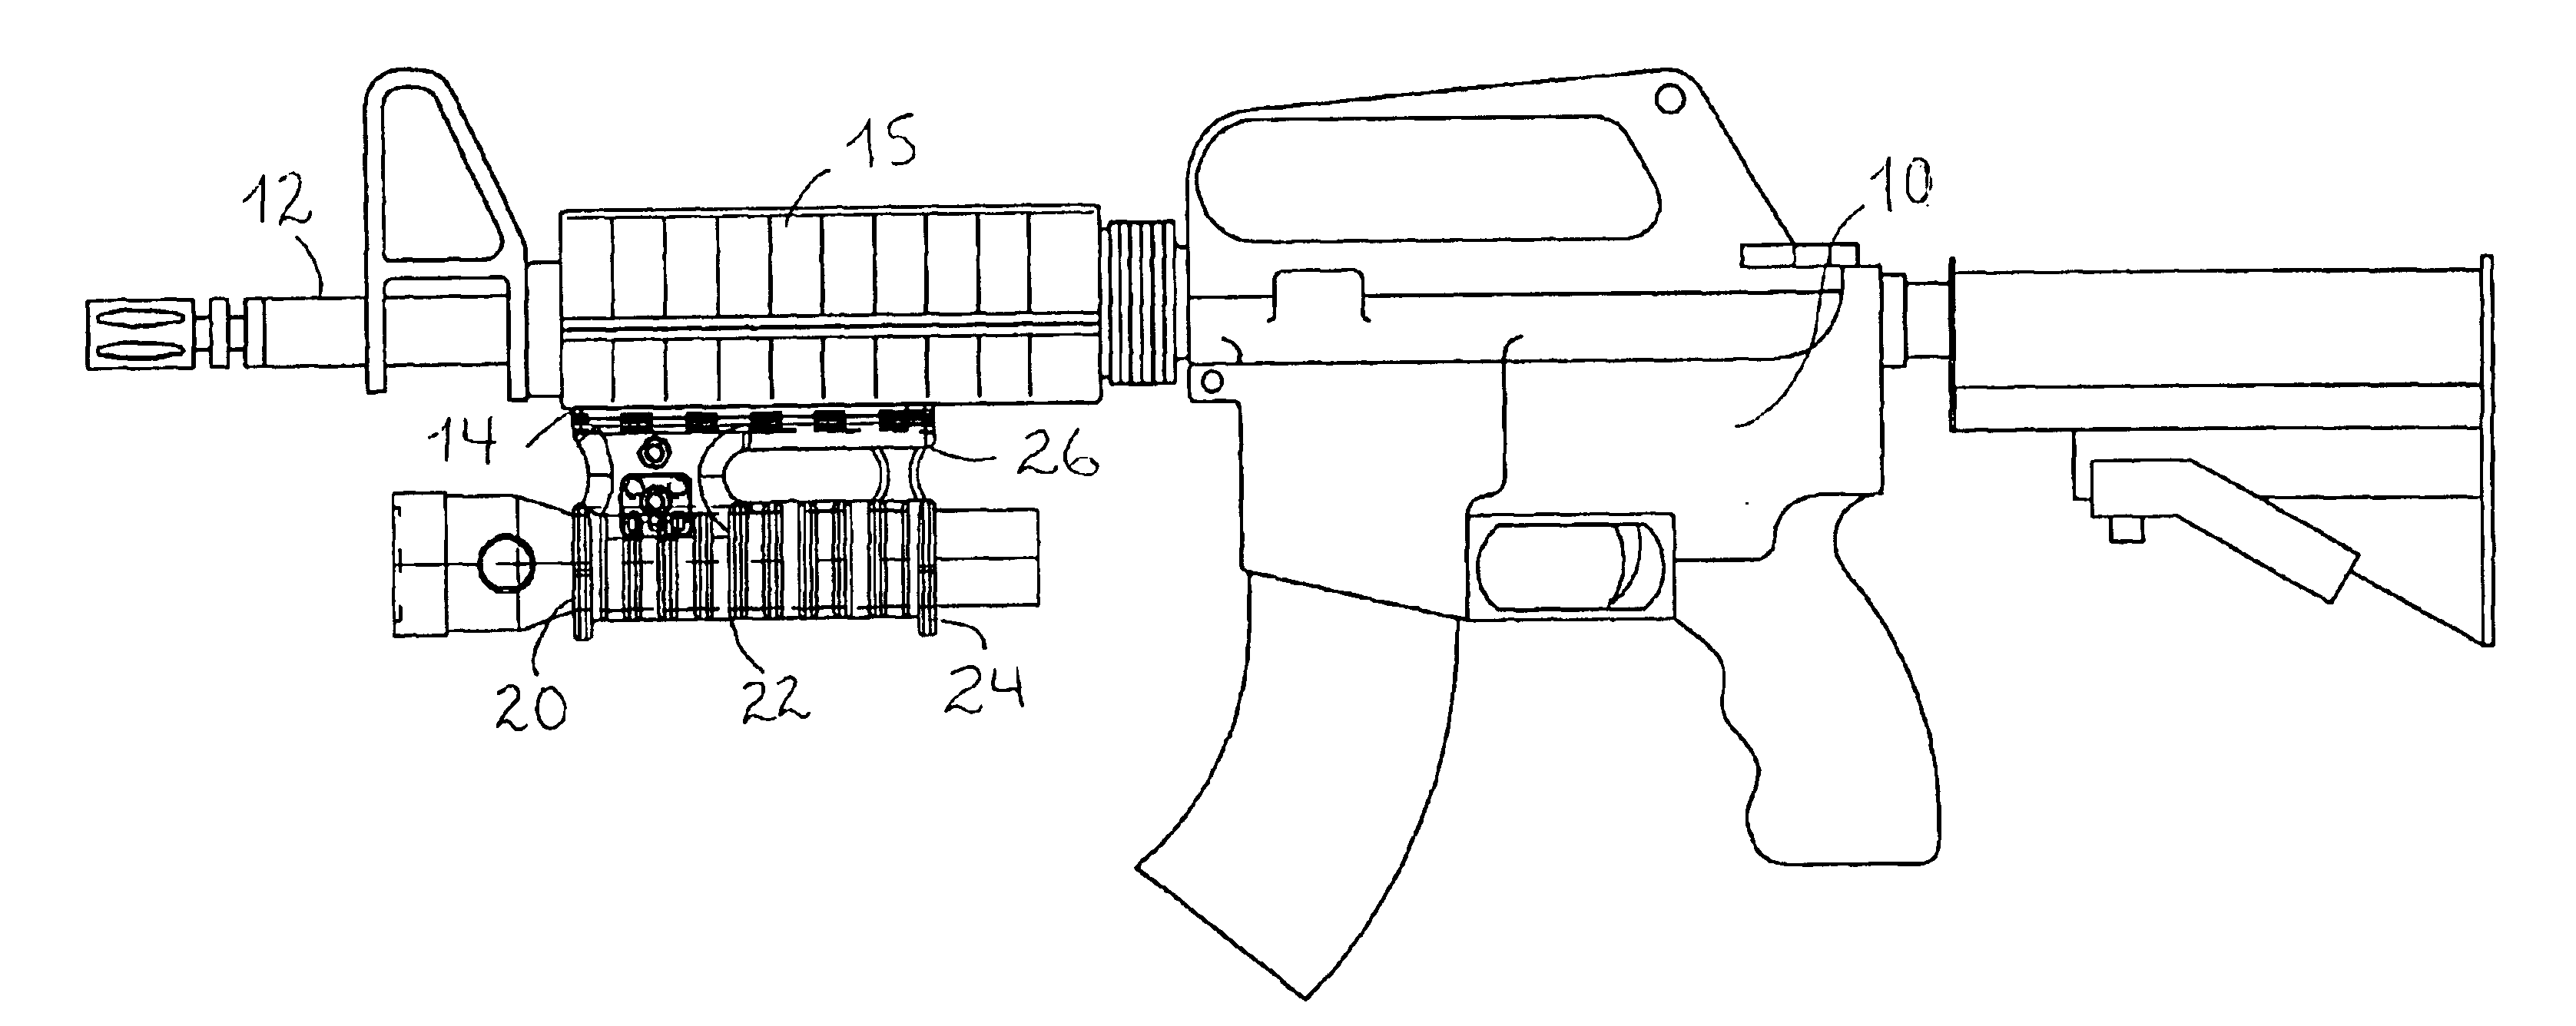 Flashlight mount for a firearm